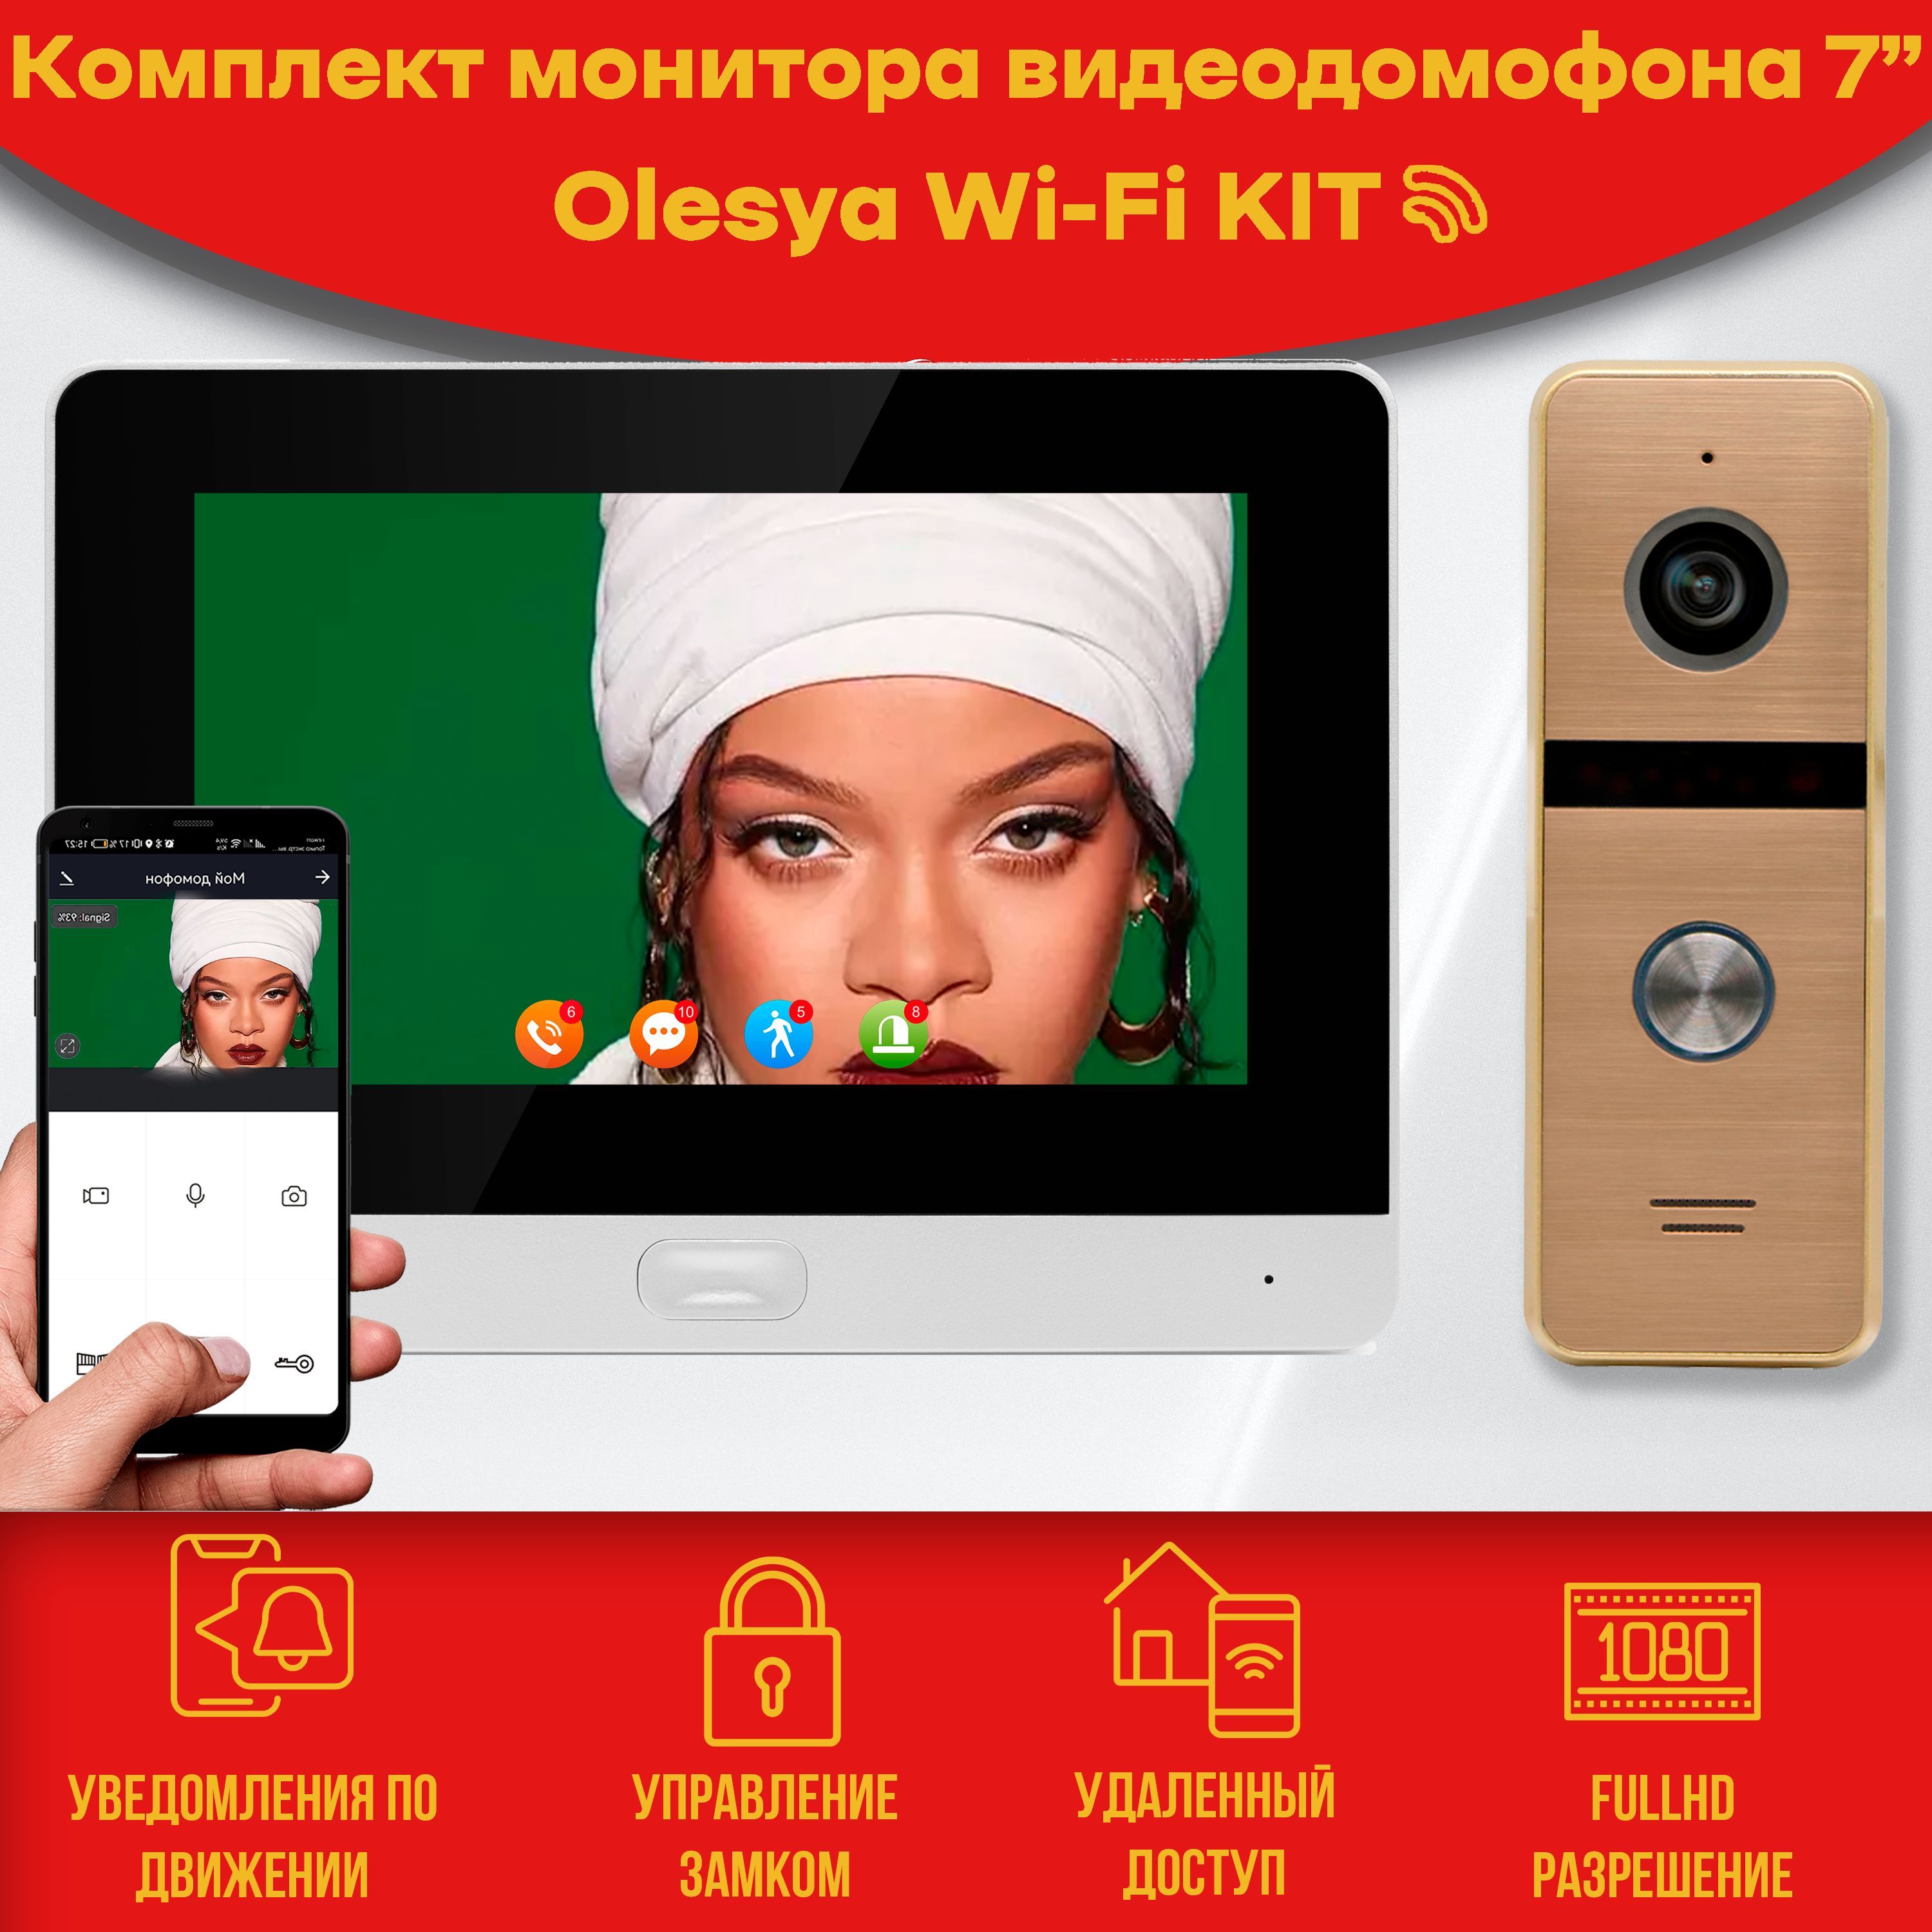 Комплект видеодомофона Alfavision Olesya Wi-Fi AHD1080P Full HD (911go), Серый, 7 дюймов